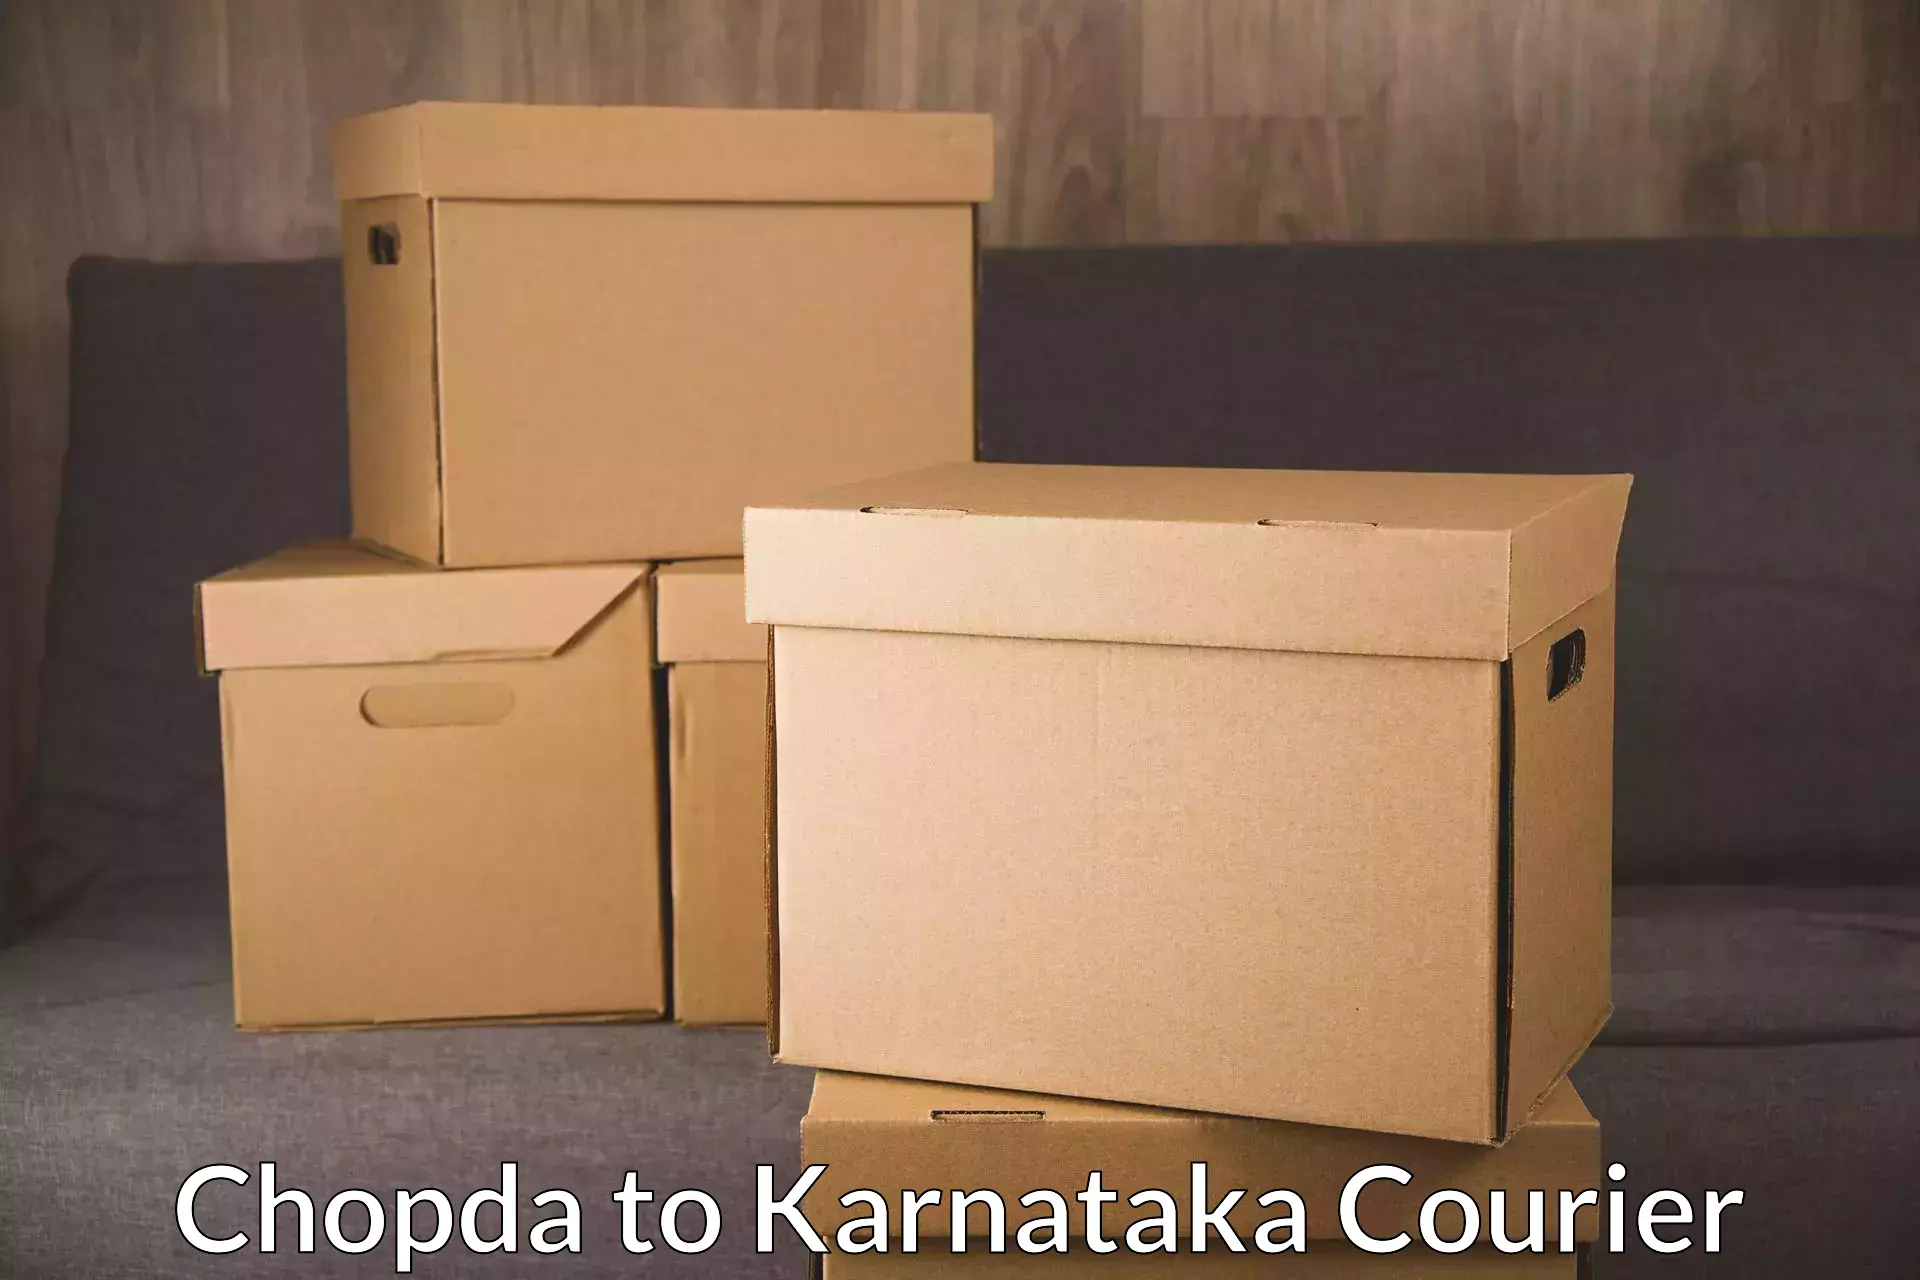 Easy return solutions Chopda to Karnataka